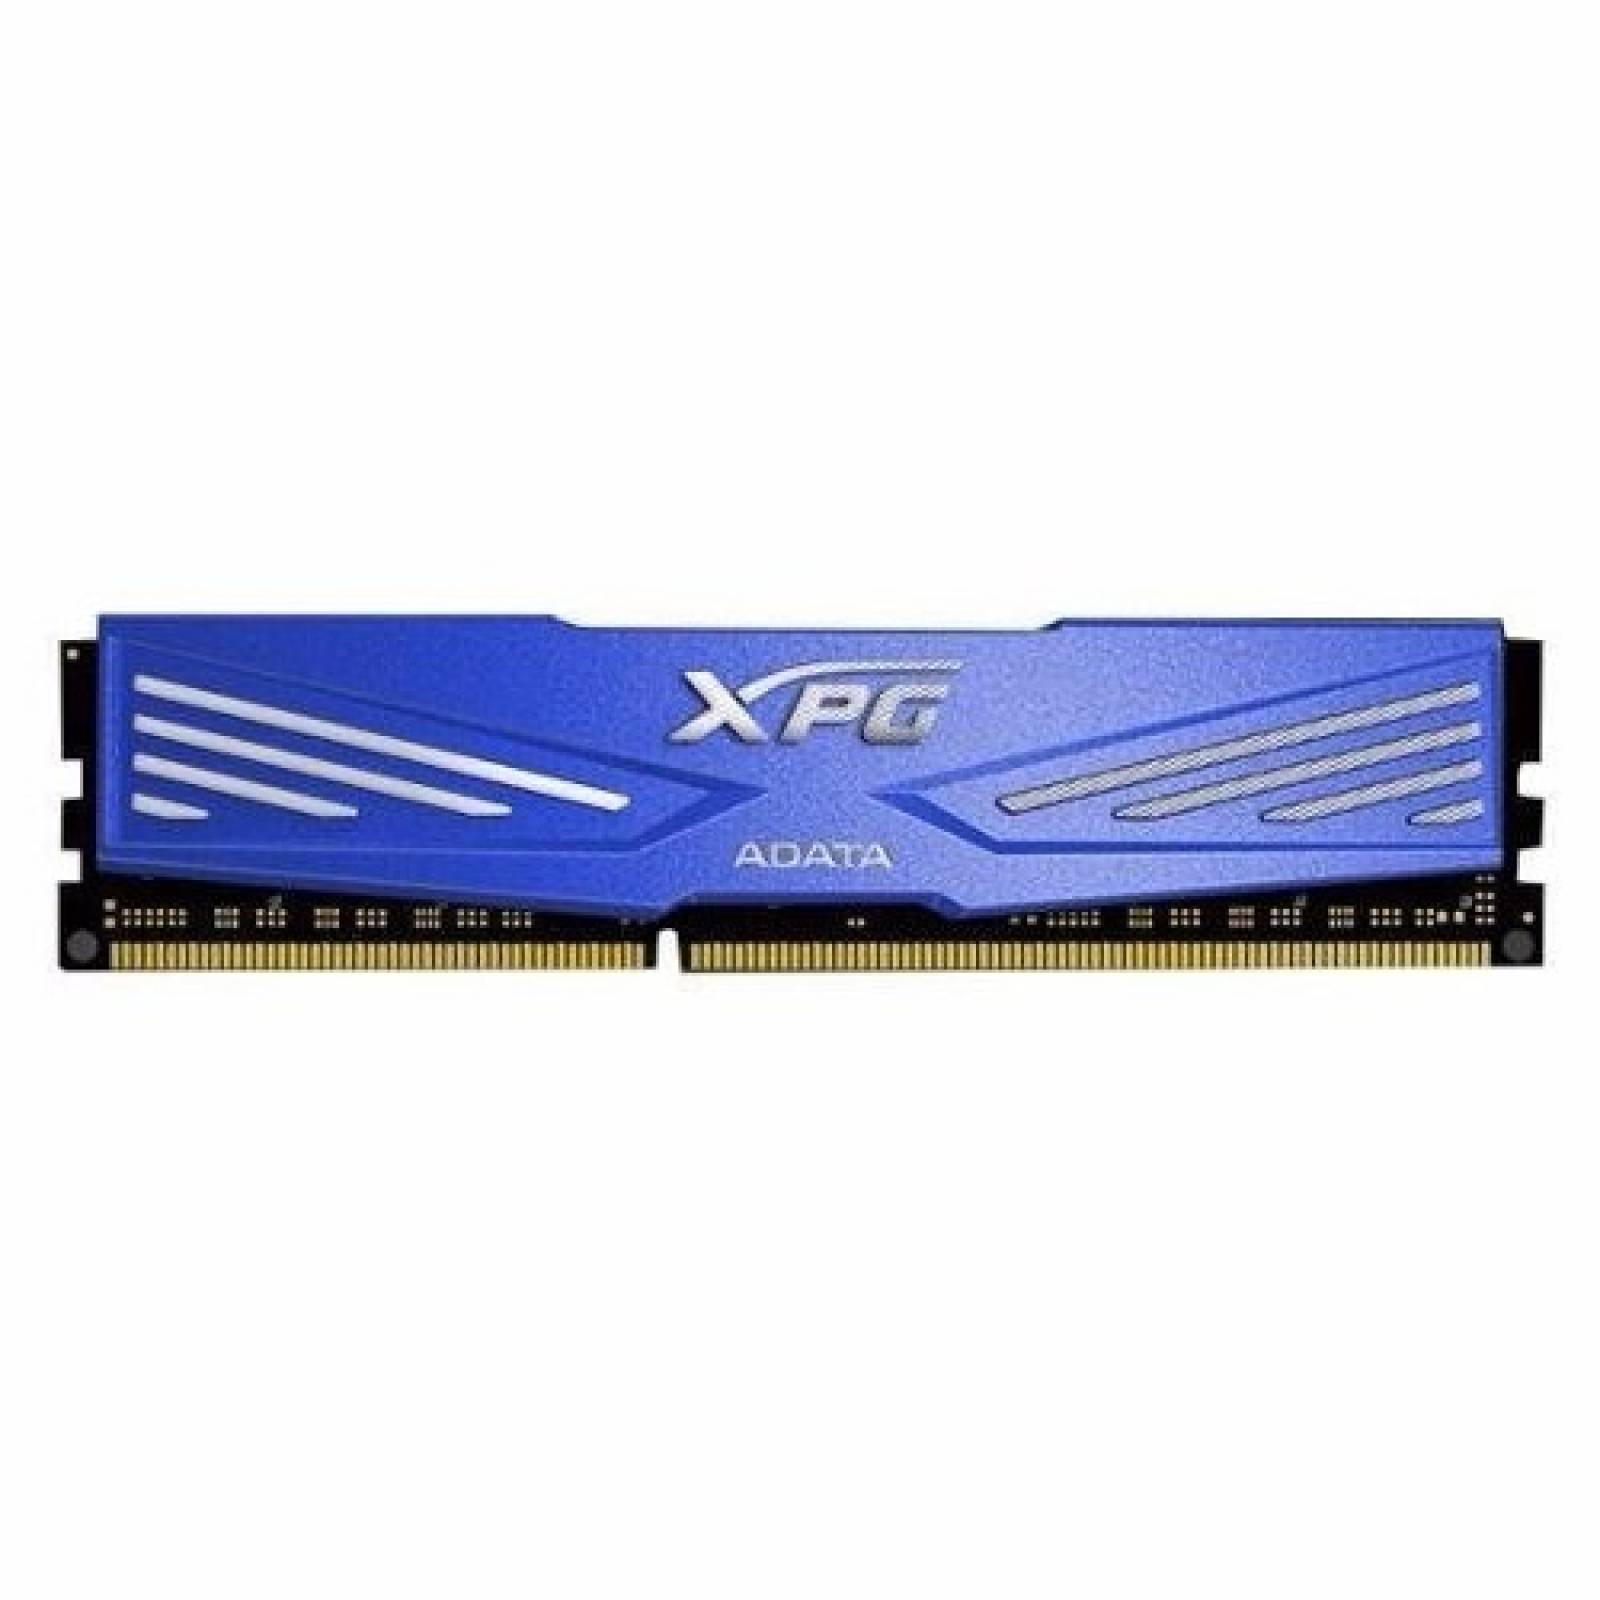 Memoria RAM Adata DDR3 XPG SKY Azul 1600MHz 8GB CL11